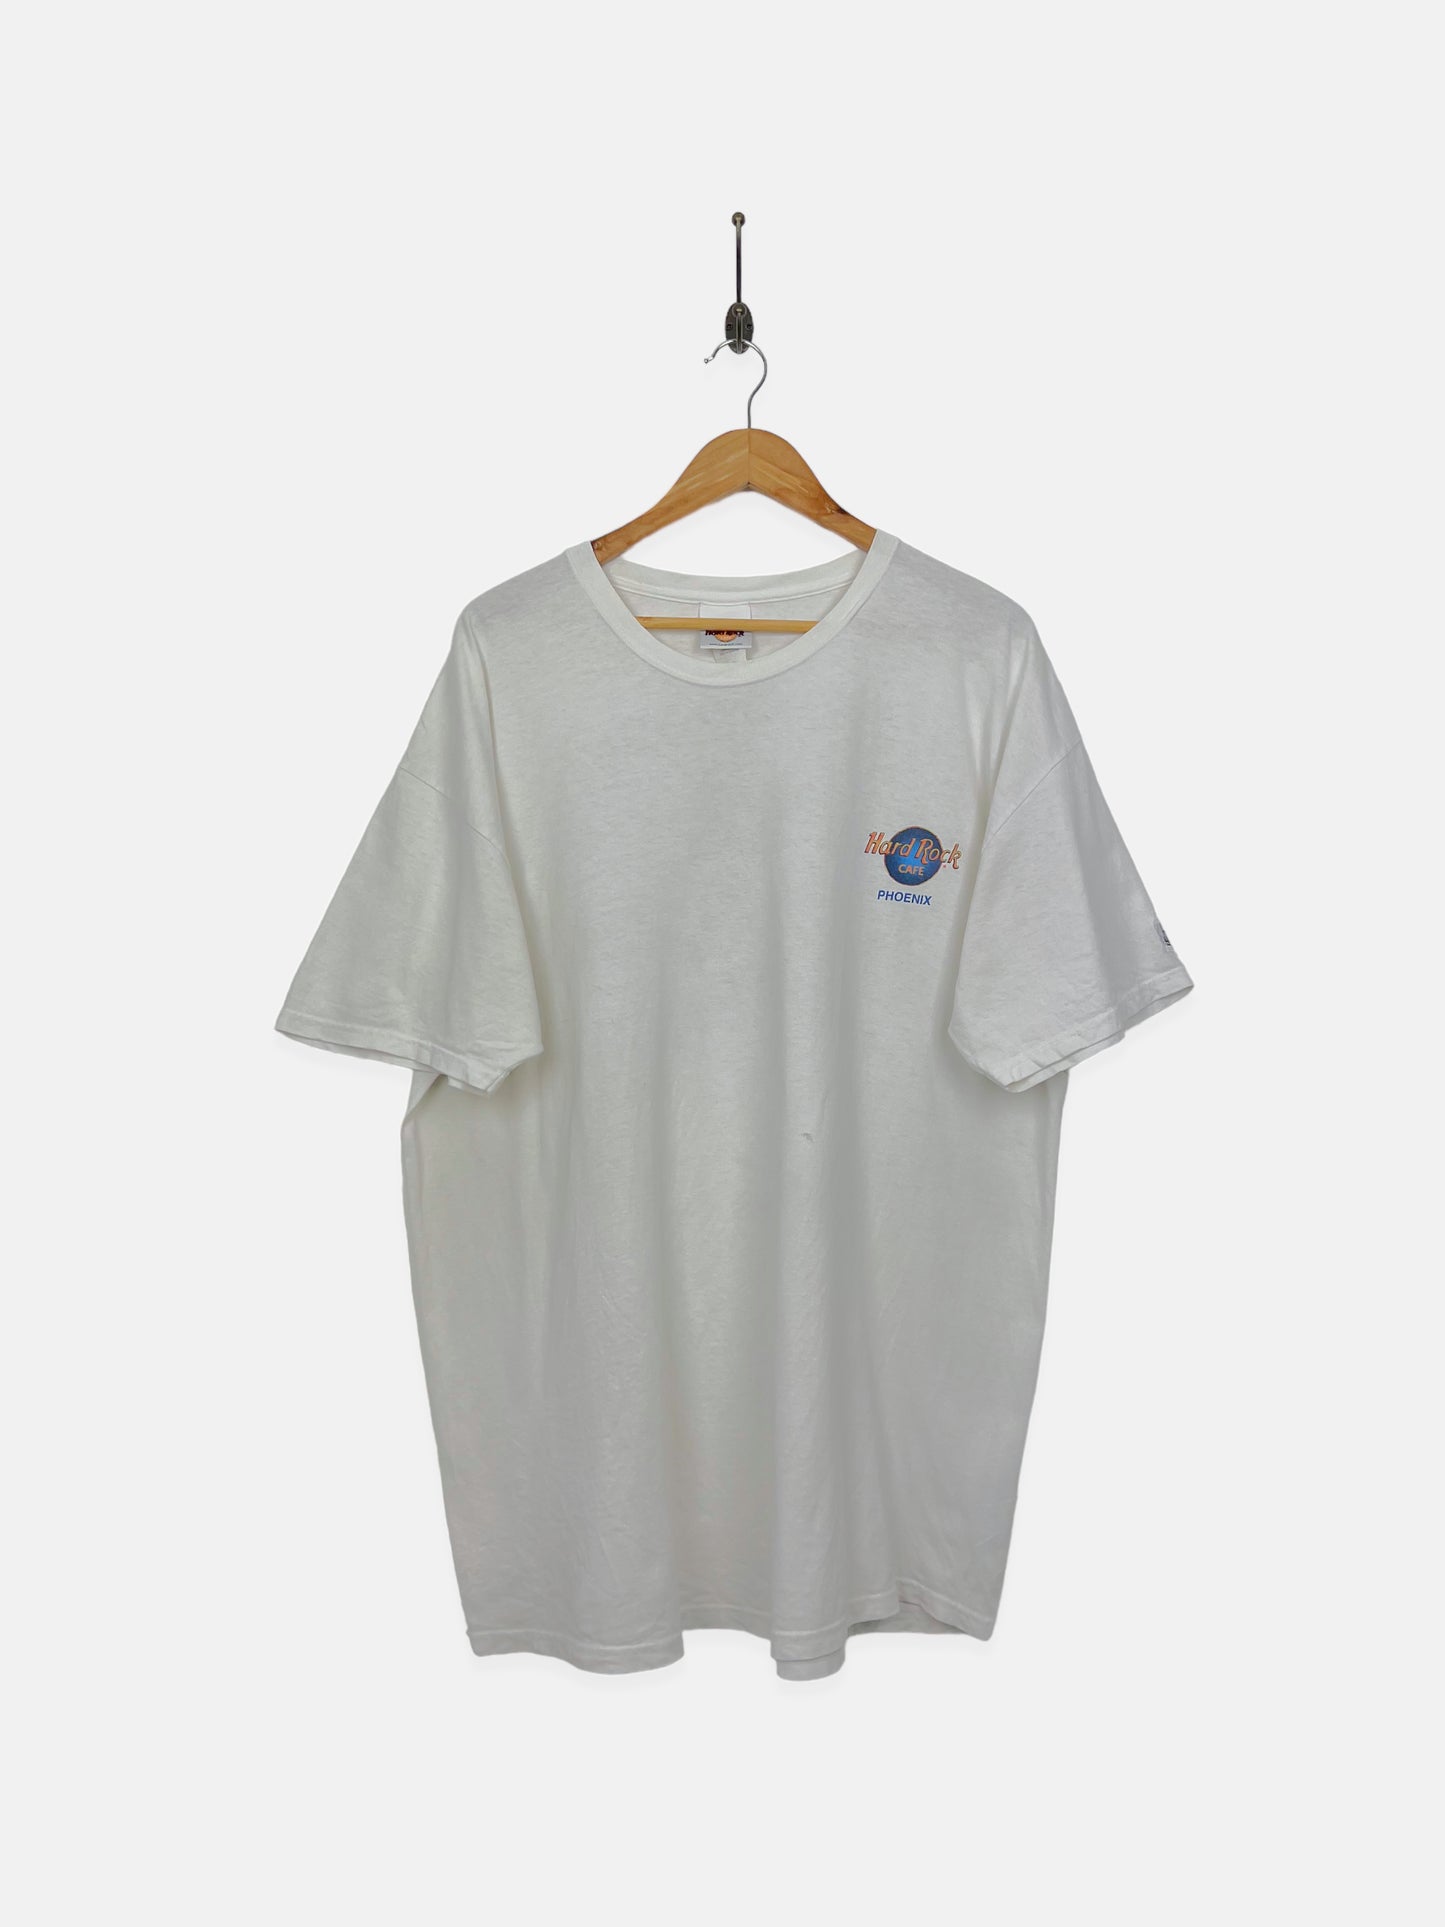 90's Hard Rock Cafe Phoenix Vintage T-Shirt Size 2XL